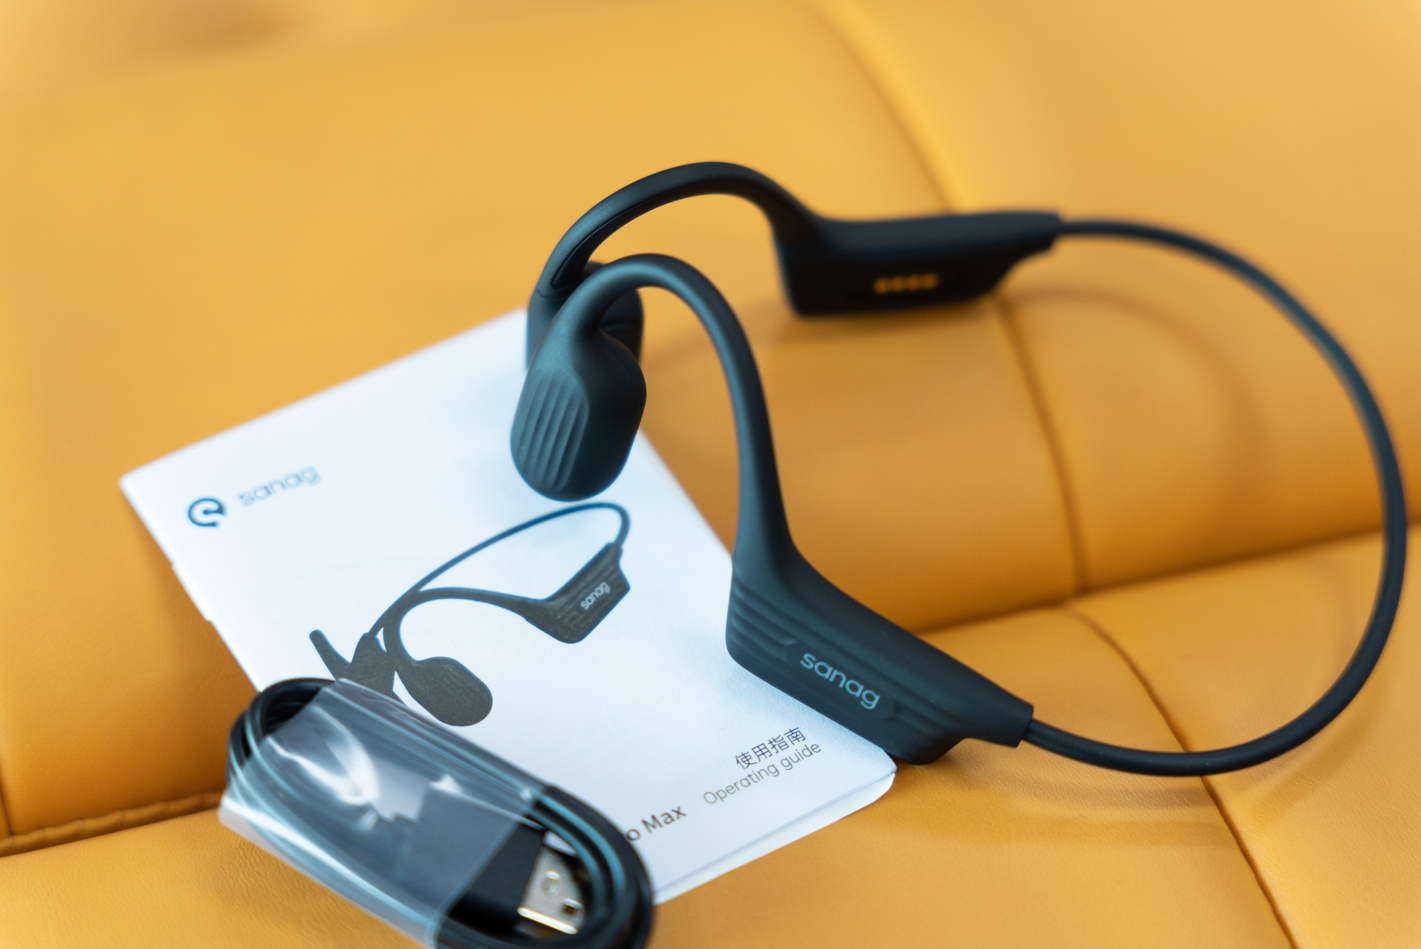 sanag塞那Z50耳夹式耳机评测：耳机就是耳饰，听歌舒适还很潮 - 哔哩哔哩